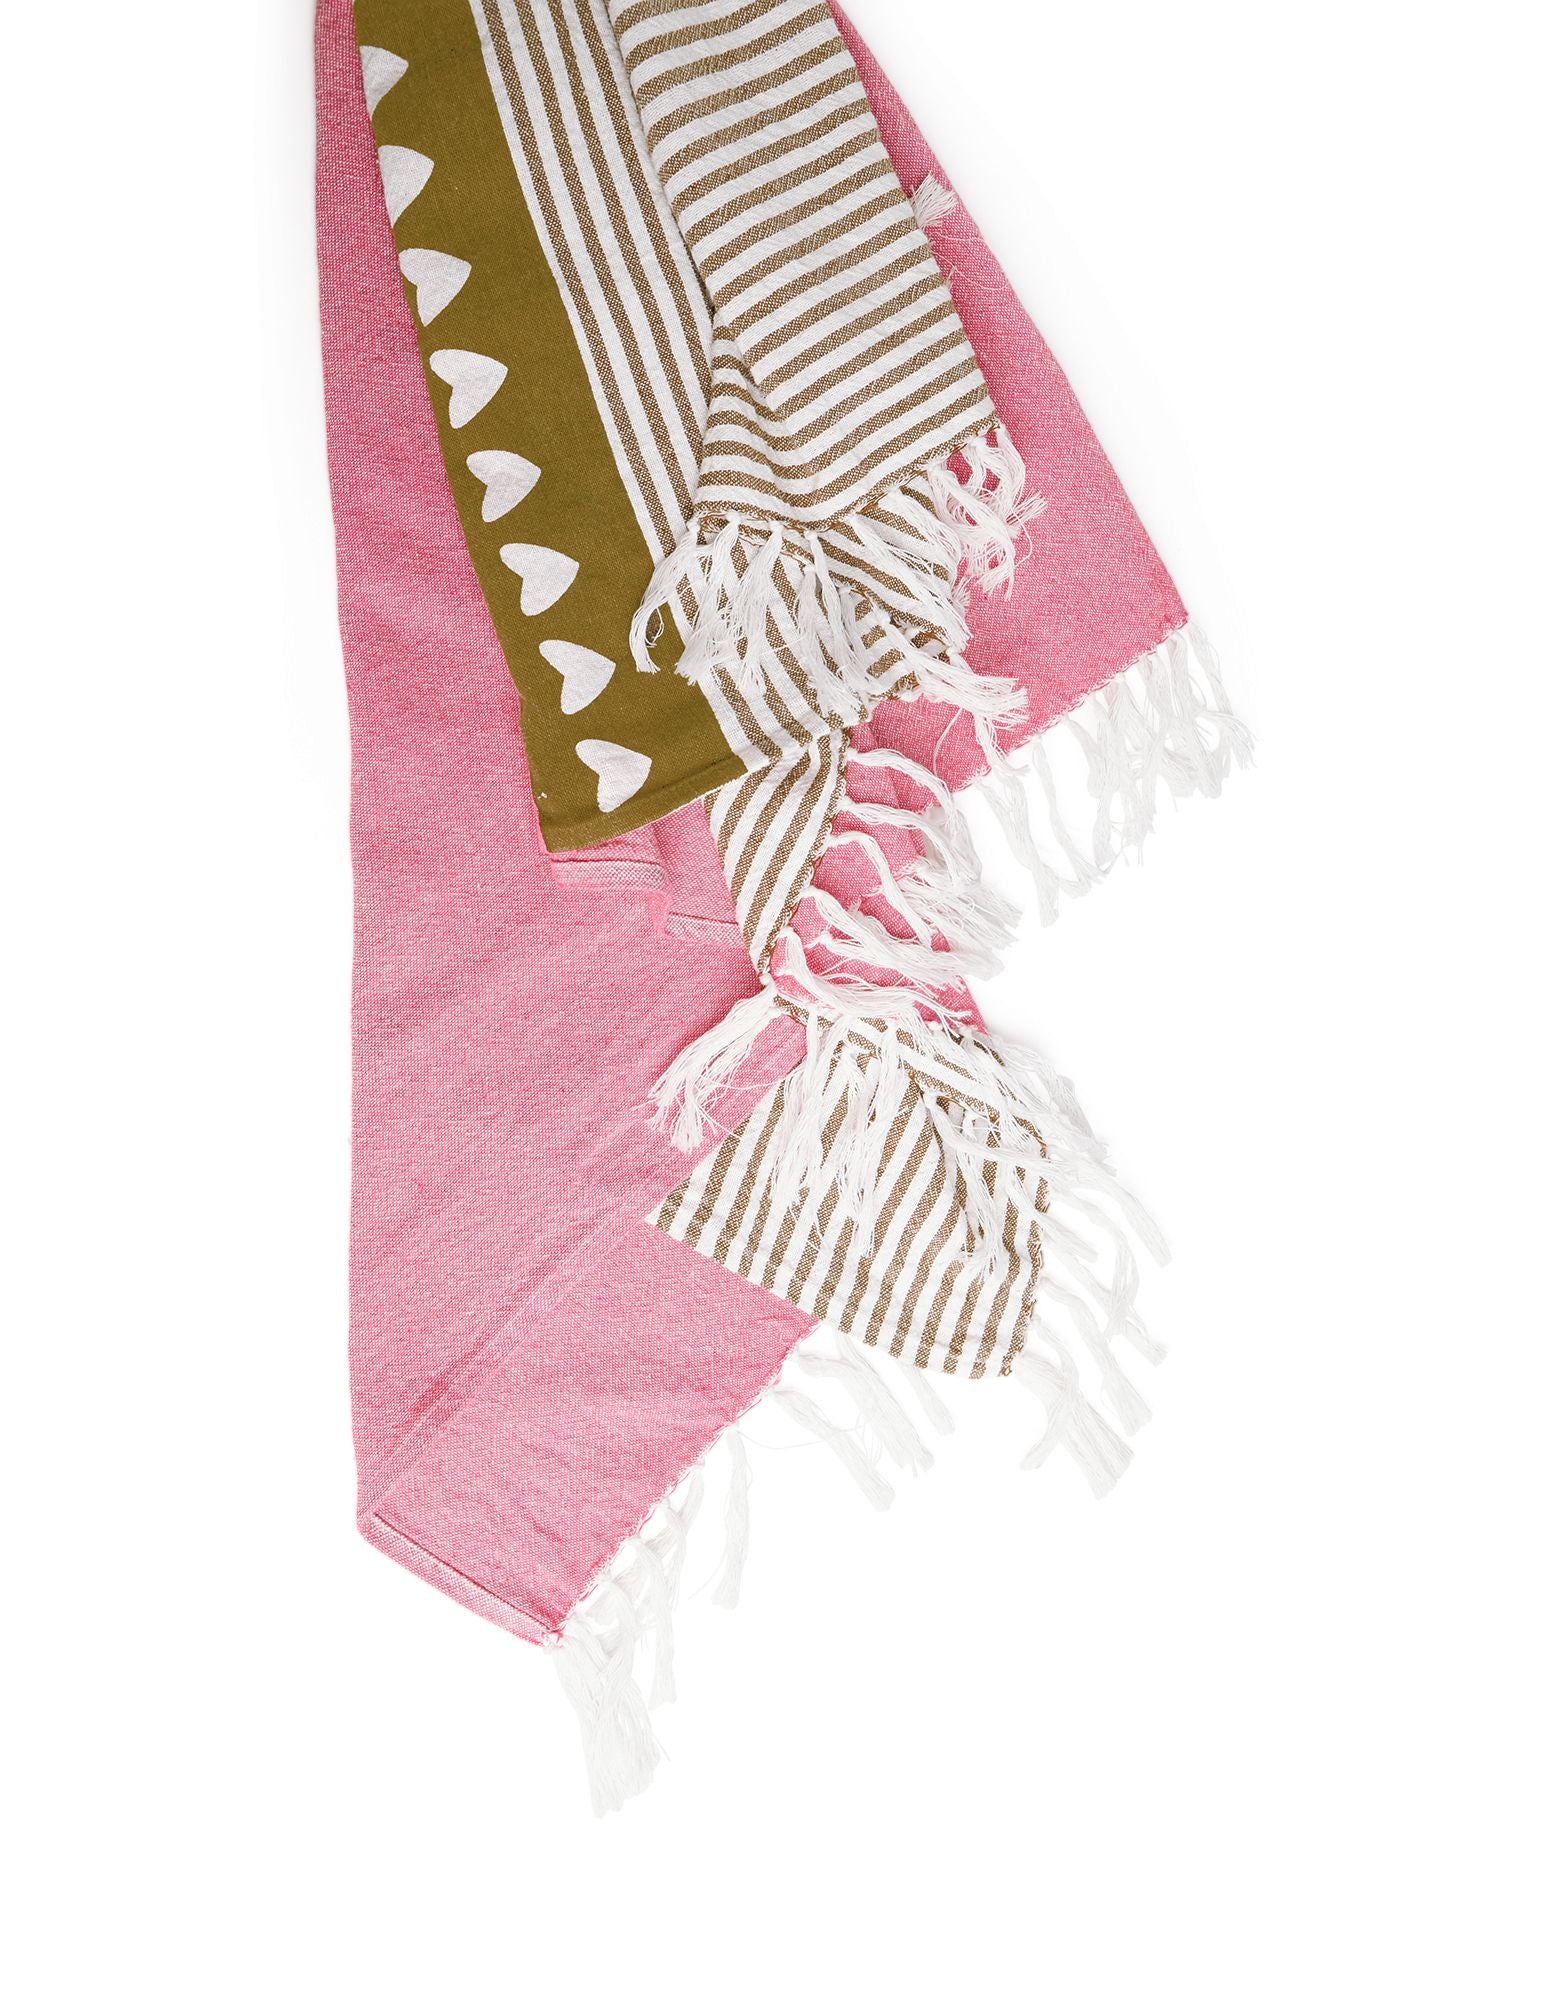 Elm - Turkish Towel - Pink / Mustard Stripe